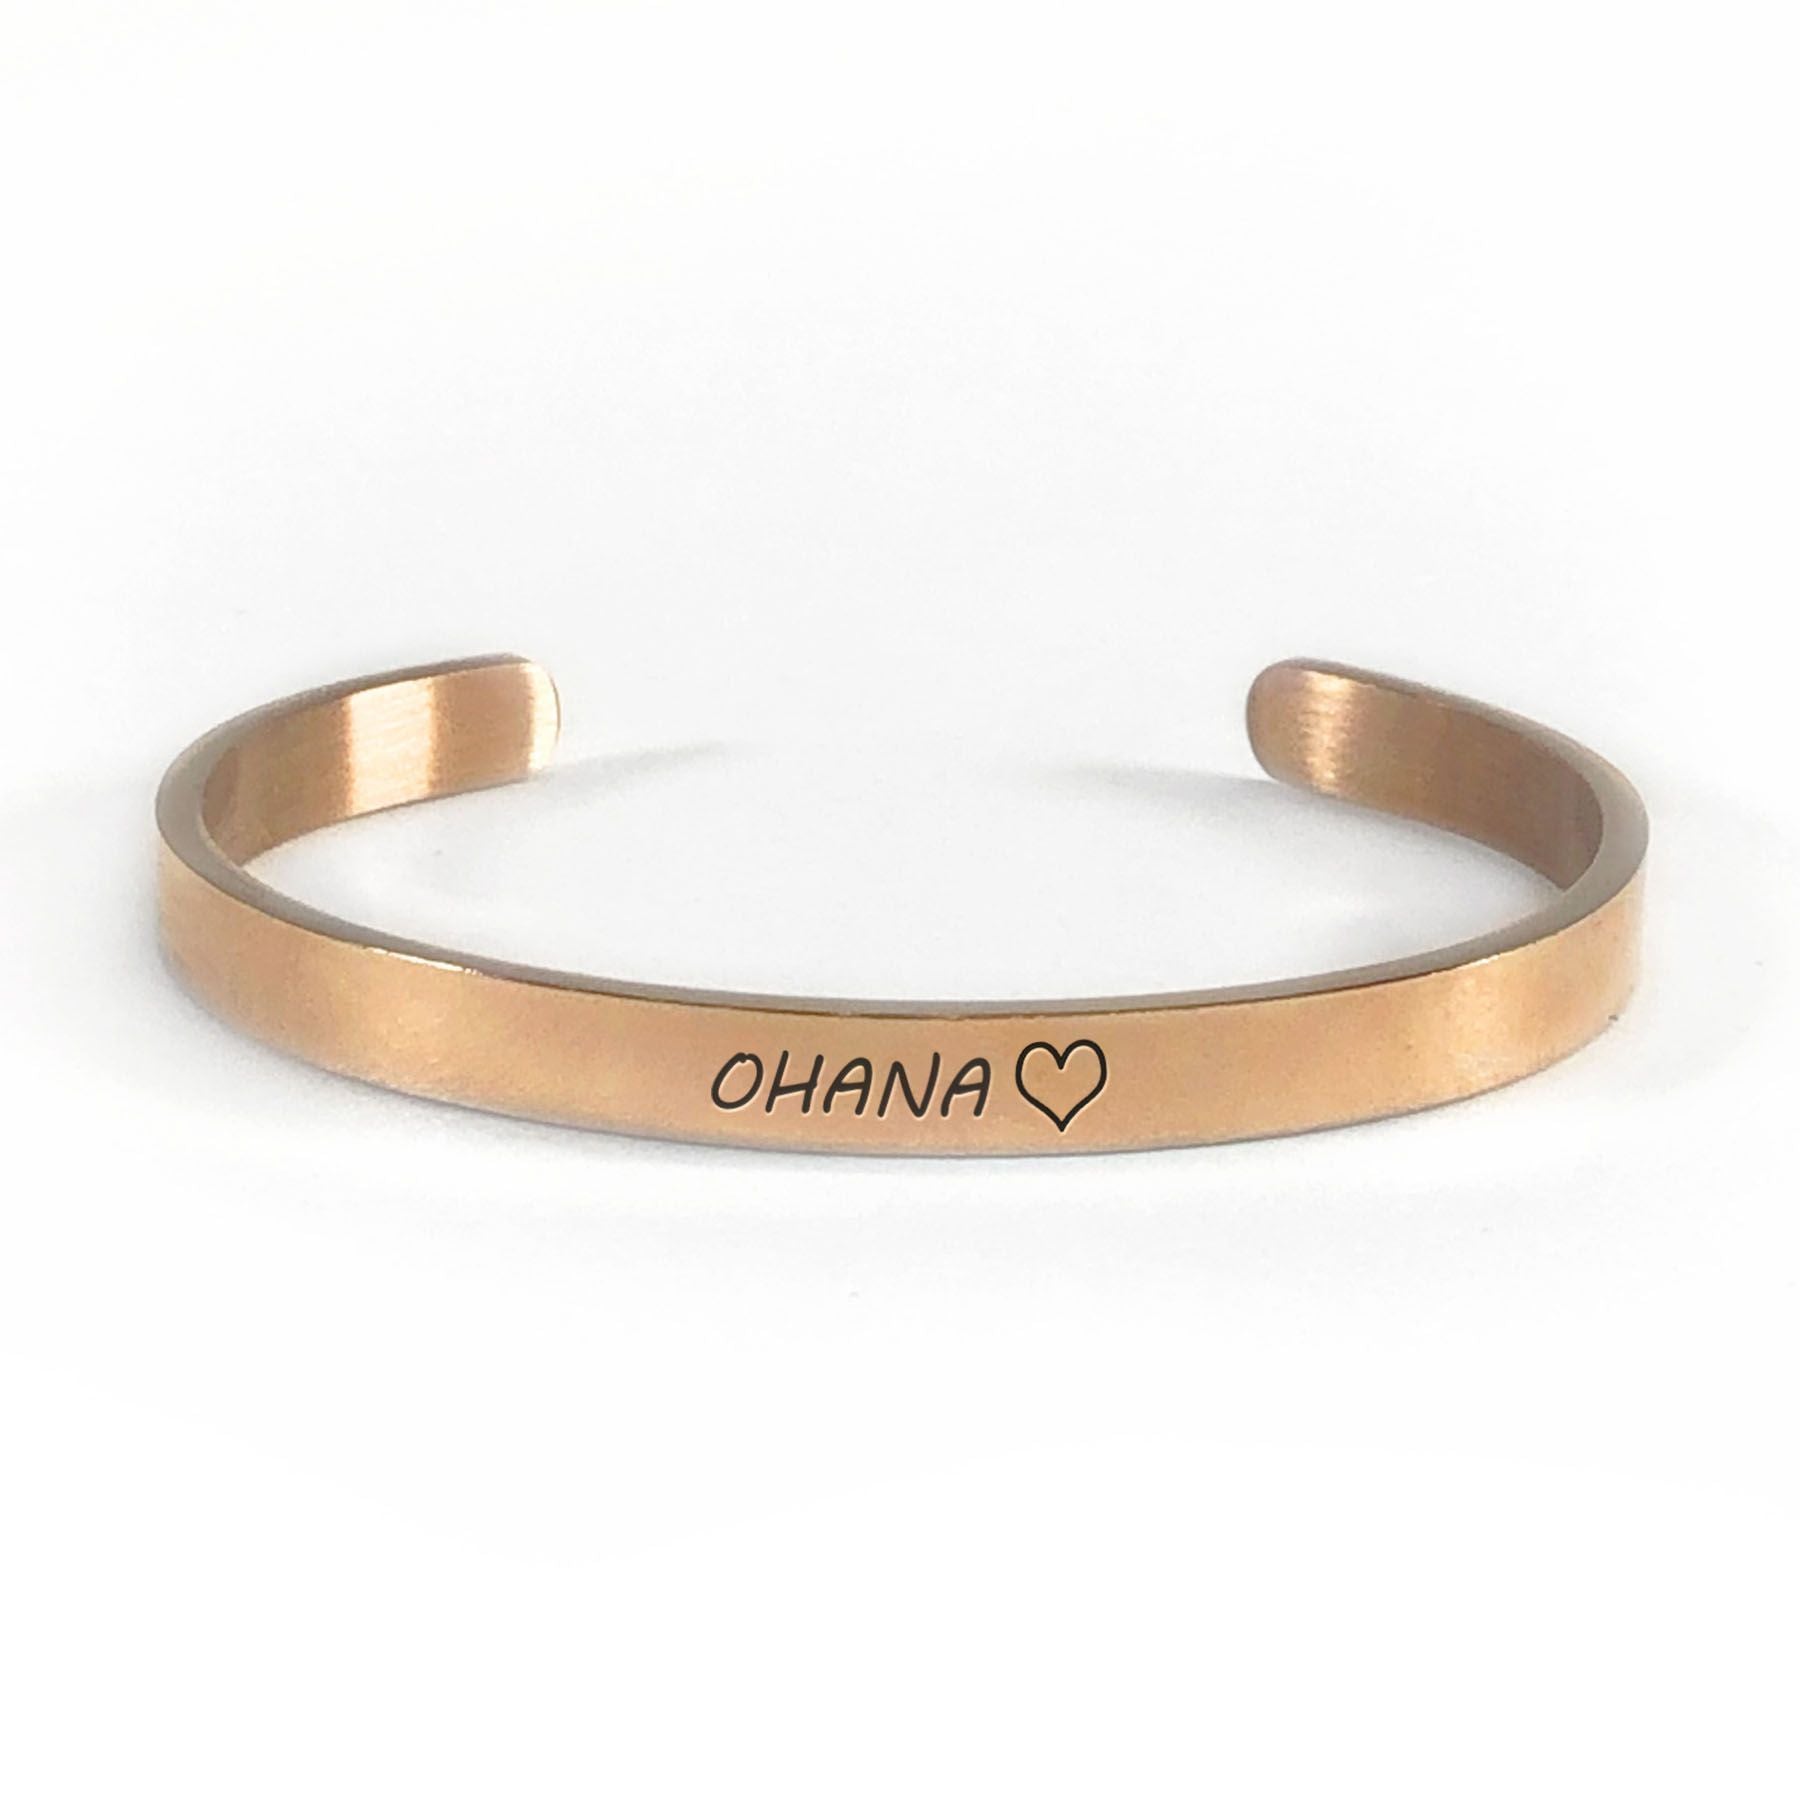 Ohana bracelet with rose gold plating